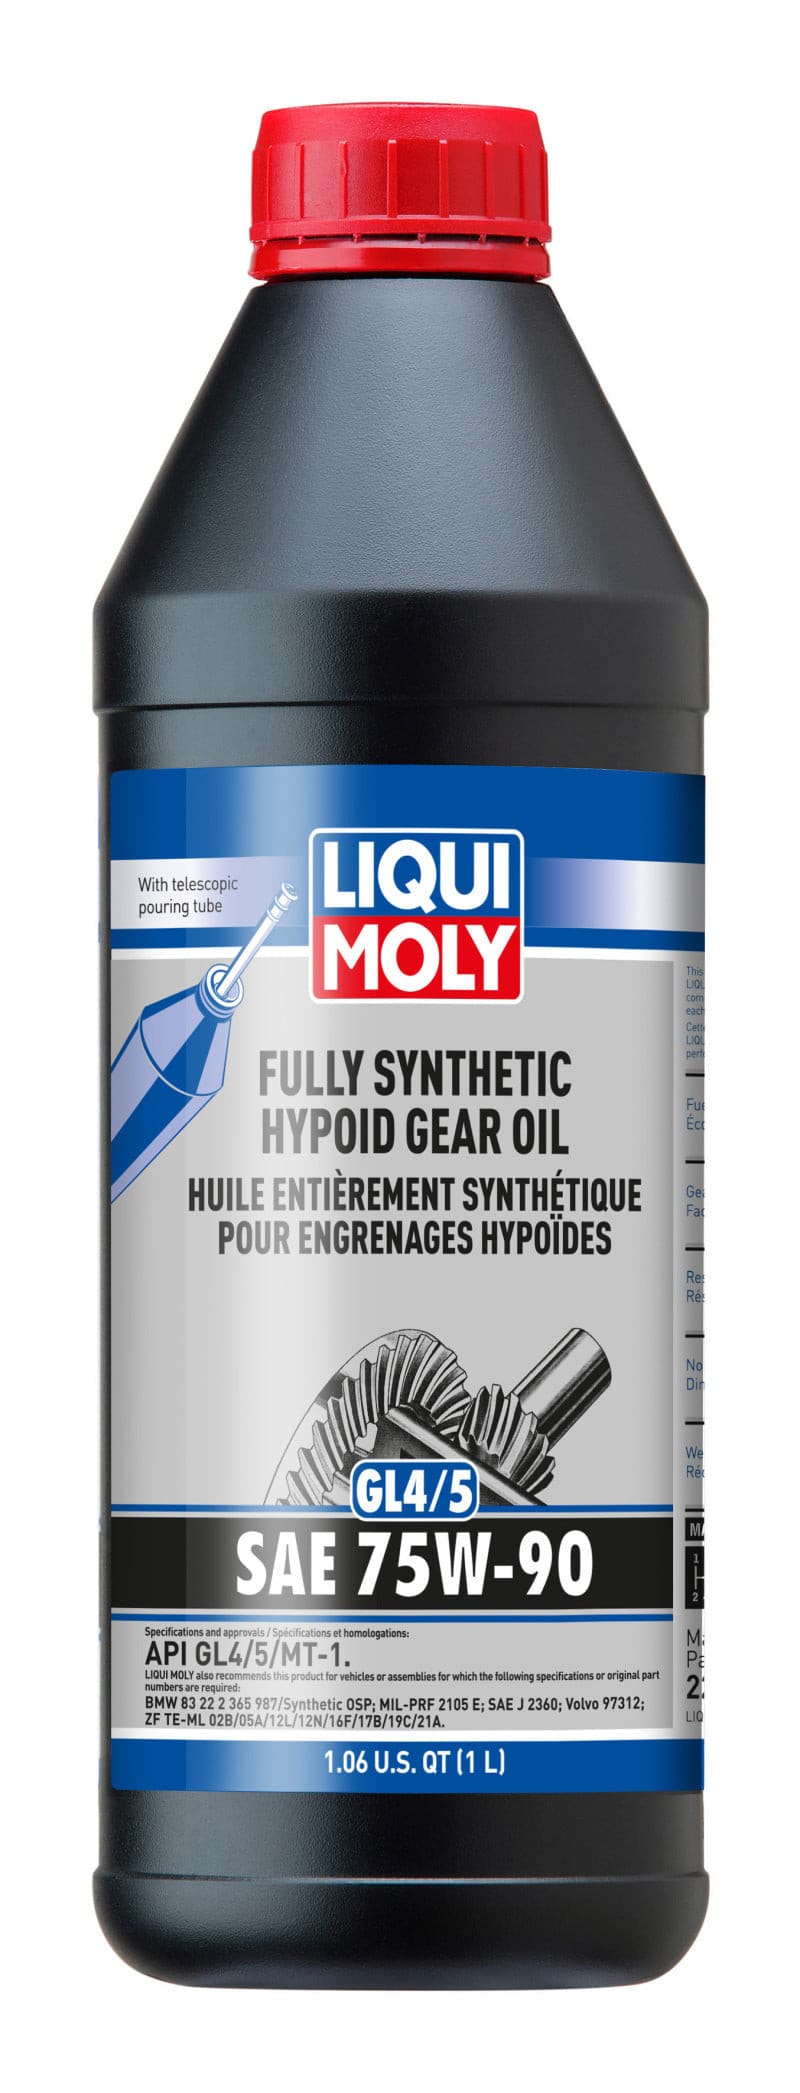 LIQUI MOLY 1L Fully Synthetic Hypoid Gear Oil (GL4/5) 75W90.